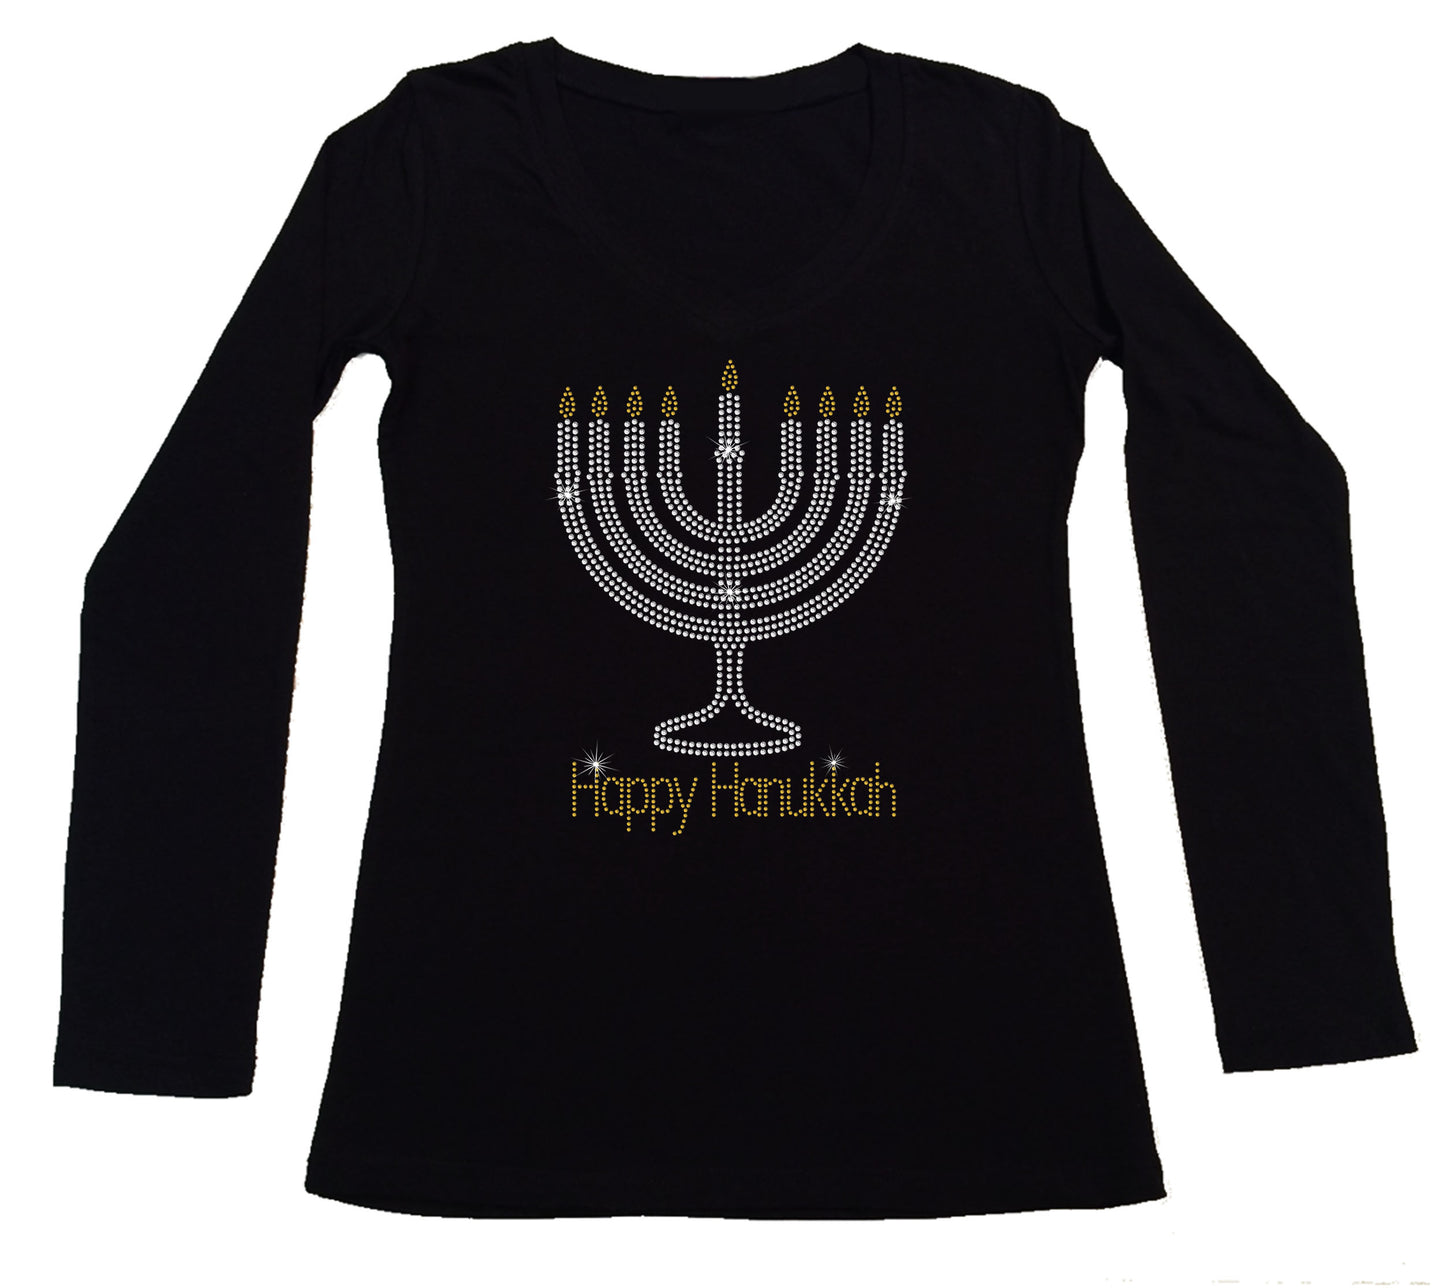 Women's Rhinestone Fitted Tight Snug Shirt Happy Hanukkah with Menorah - Holiday Shirt